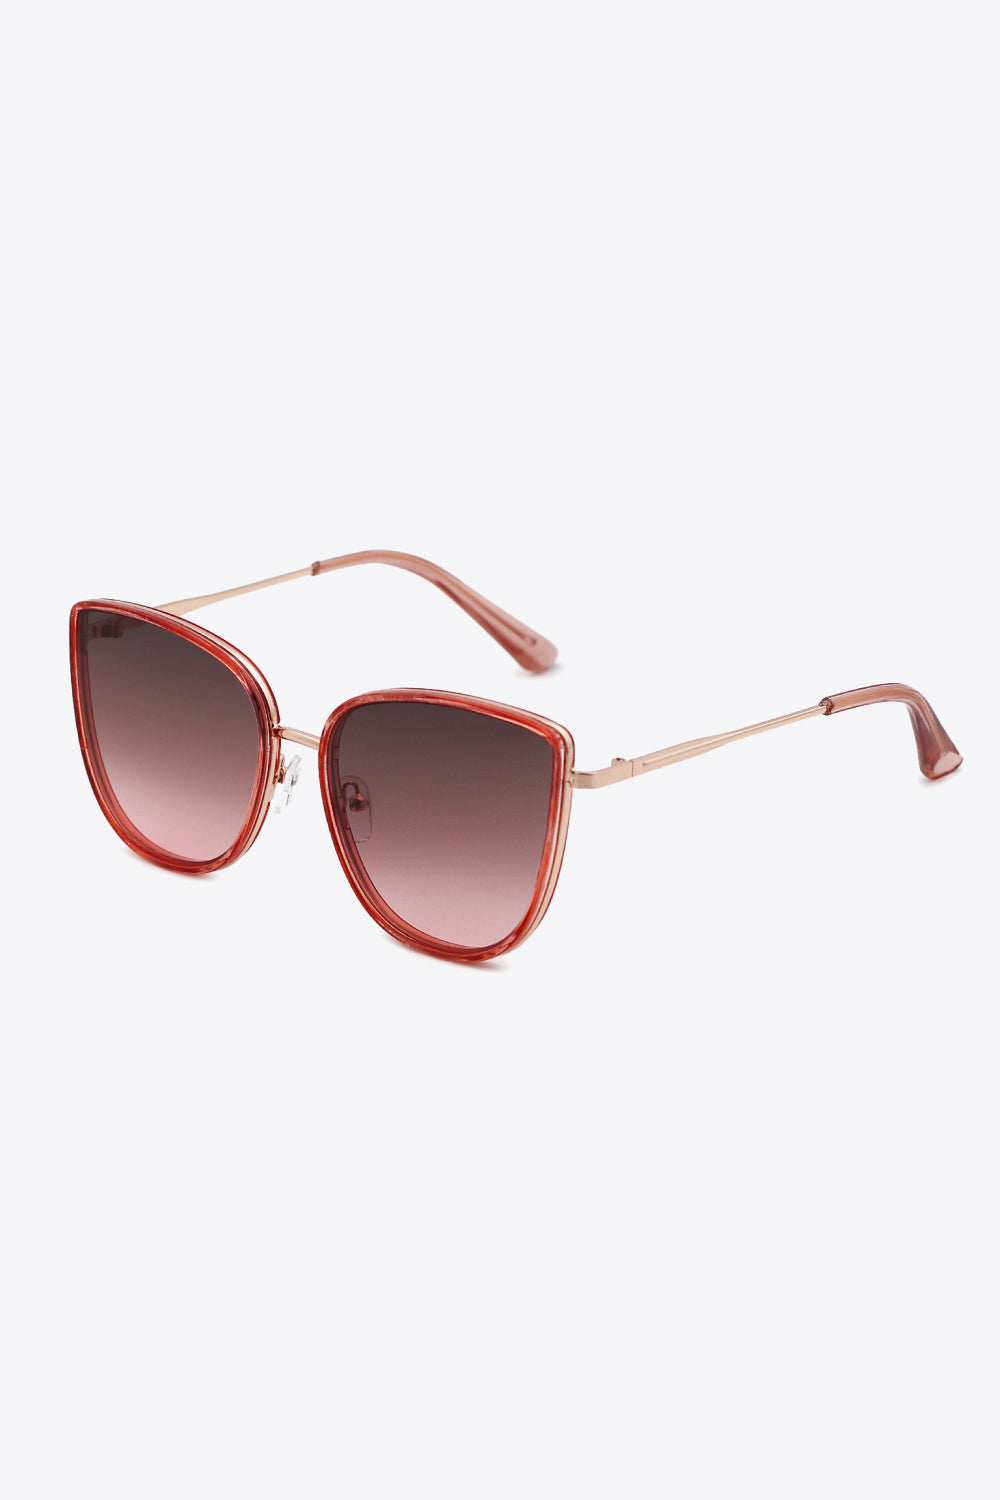 WINE ONE SIZE Full Rim Metal-Plastic Hybrid Frame Sunglasses - 2 colors - Sunglasses at TFC&H Co.